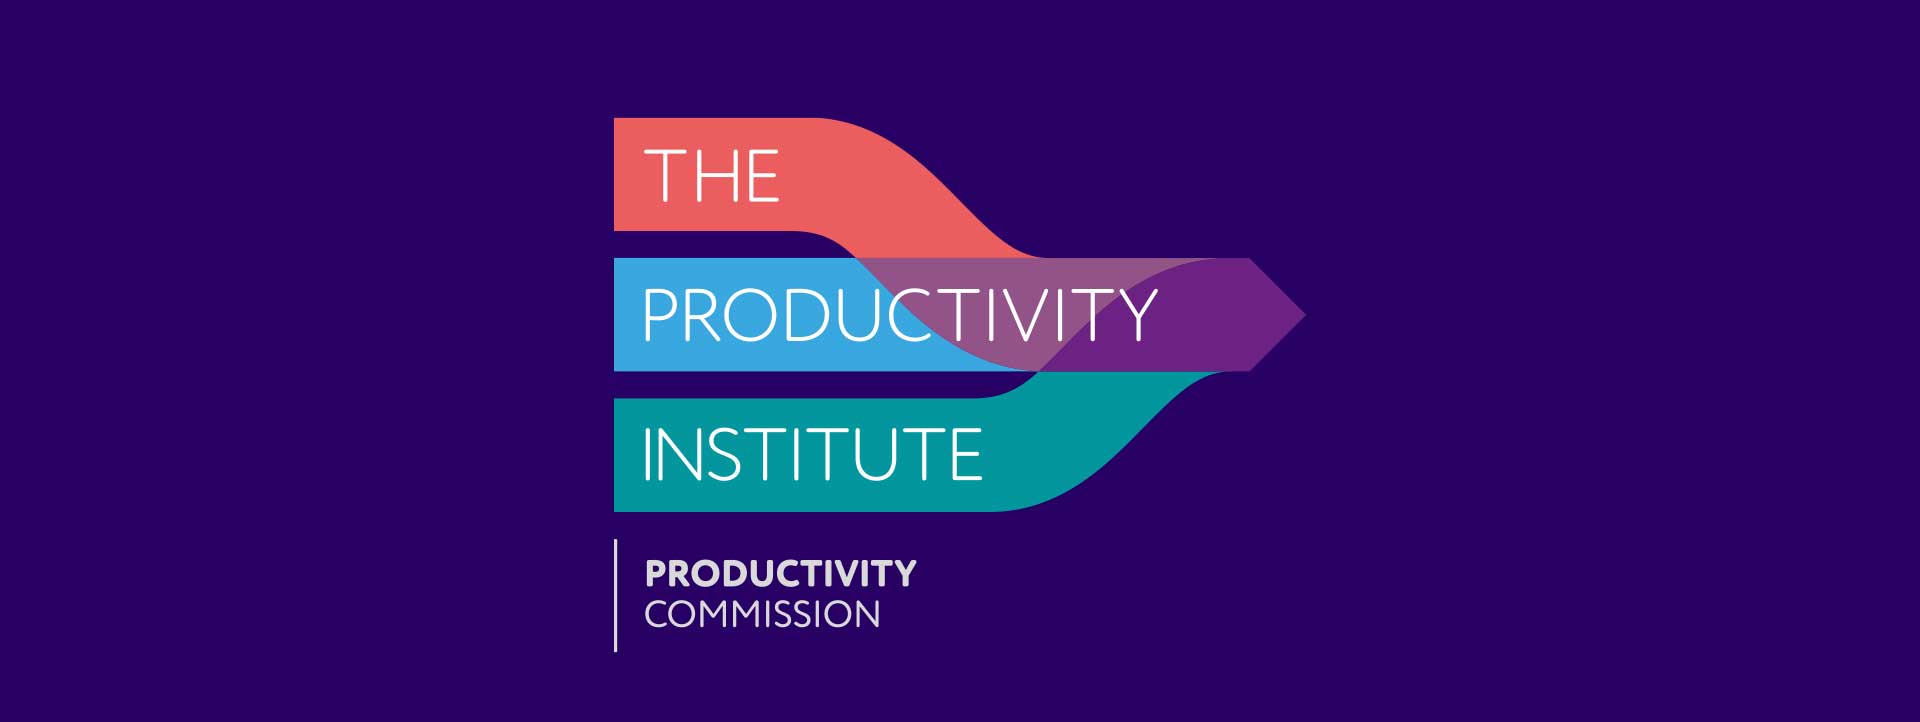 Productivity Commission logo